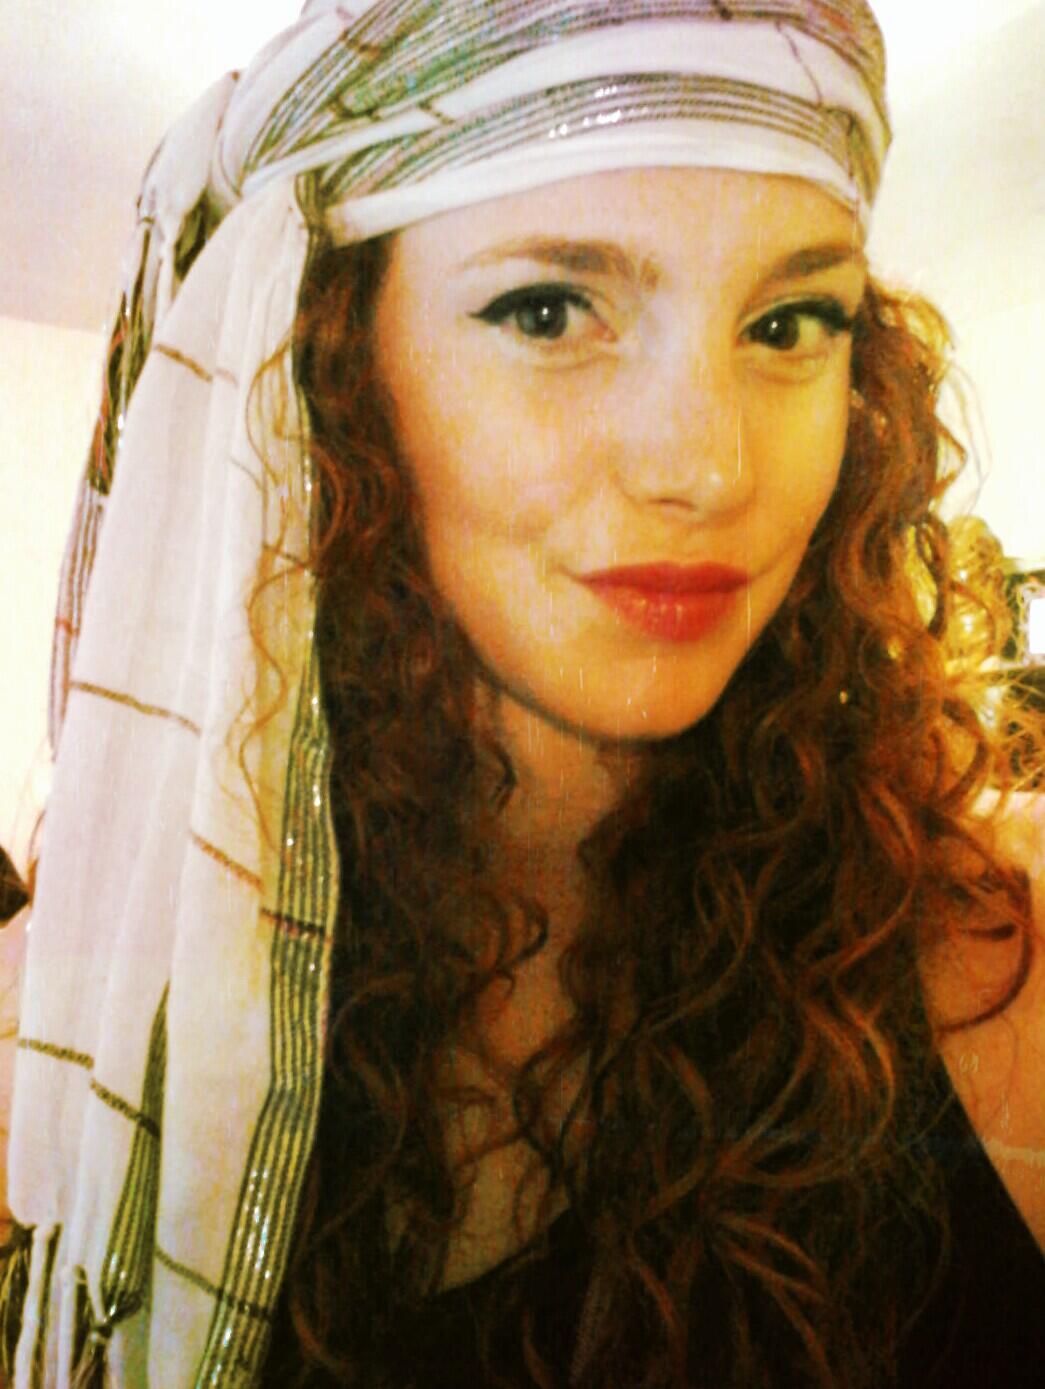 Tiffany Waxler on X: Rocking the 'hippie turban' #headscarf  #beyourowntrendsetter #style http:t.conokIeDea2a  X